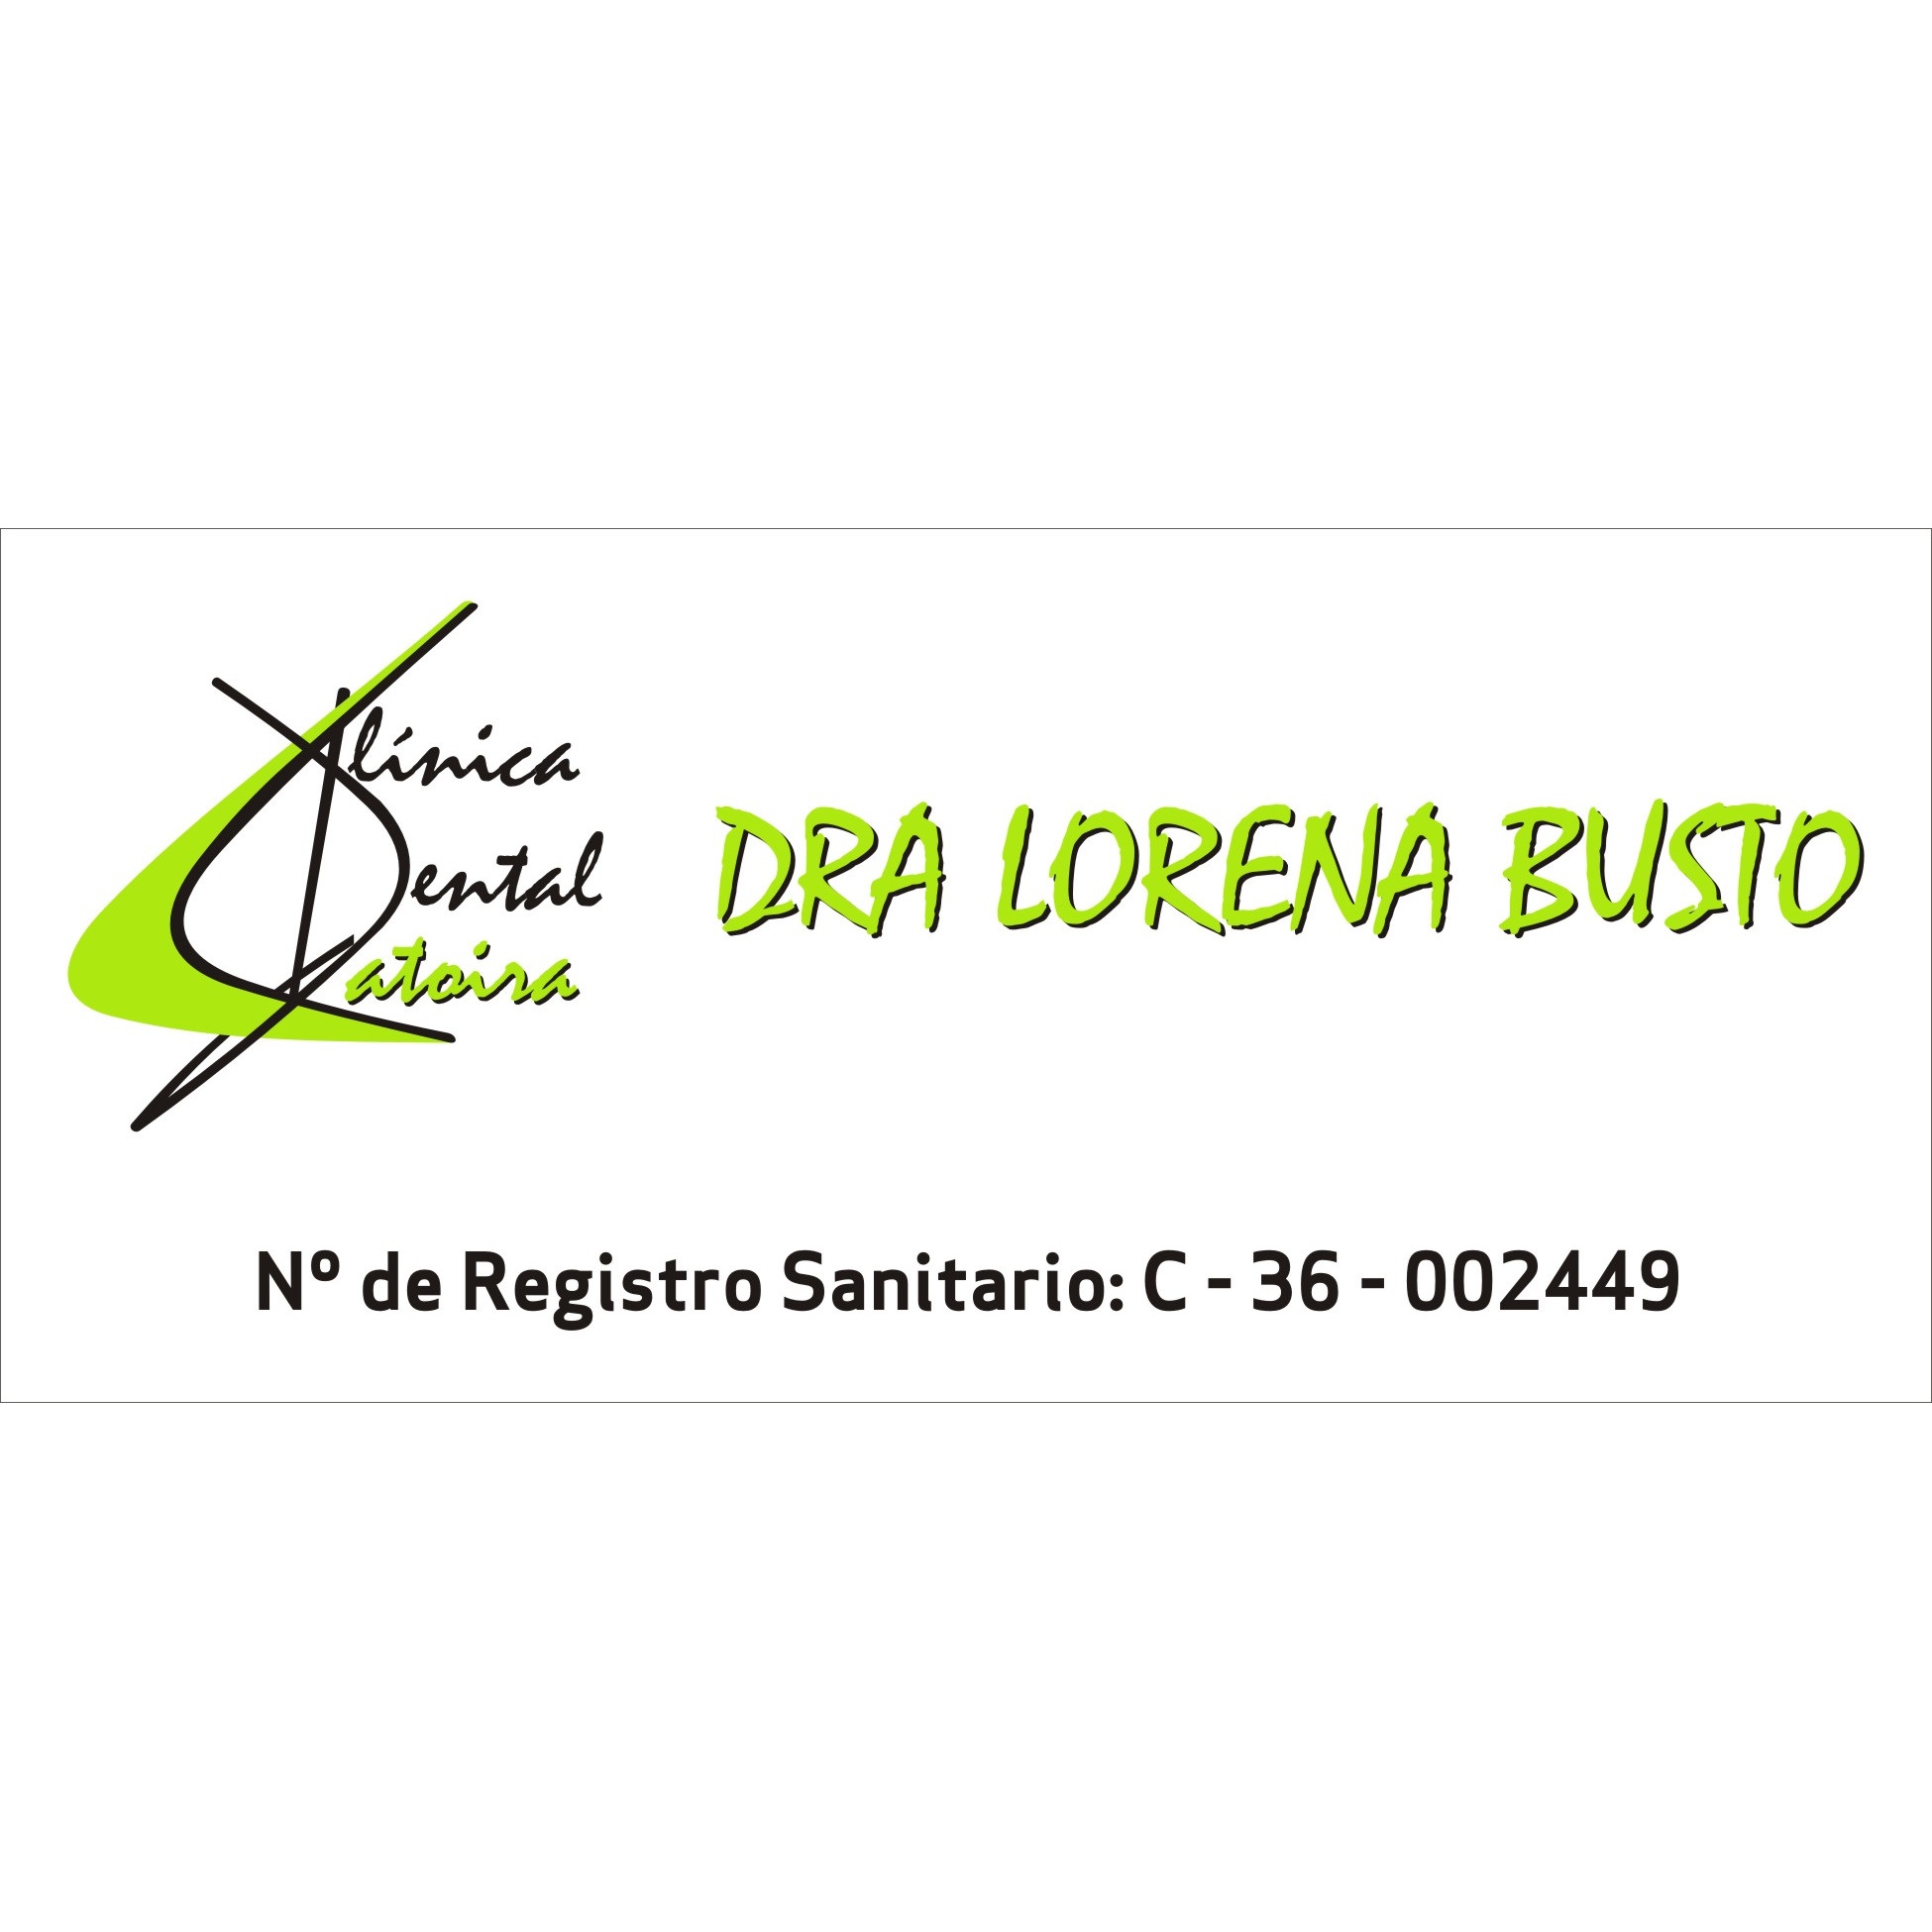 Clínica Dental Catoira Dra. Lorena Busto Logo